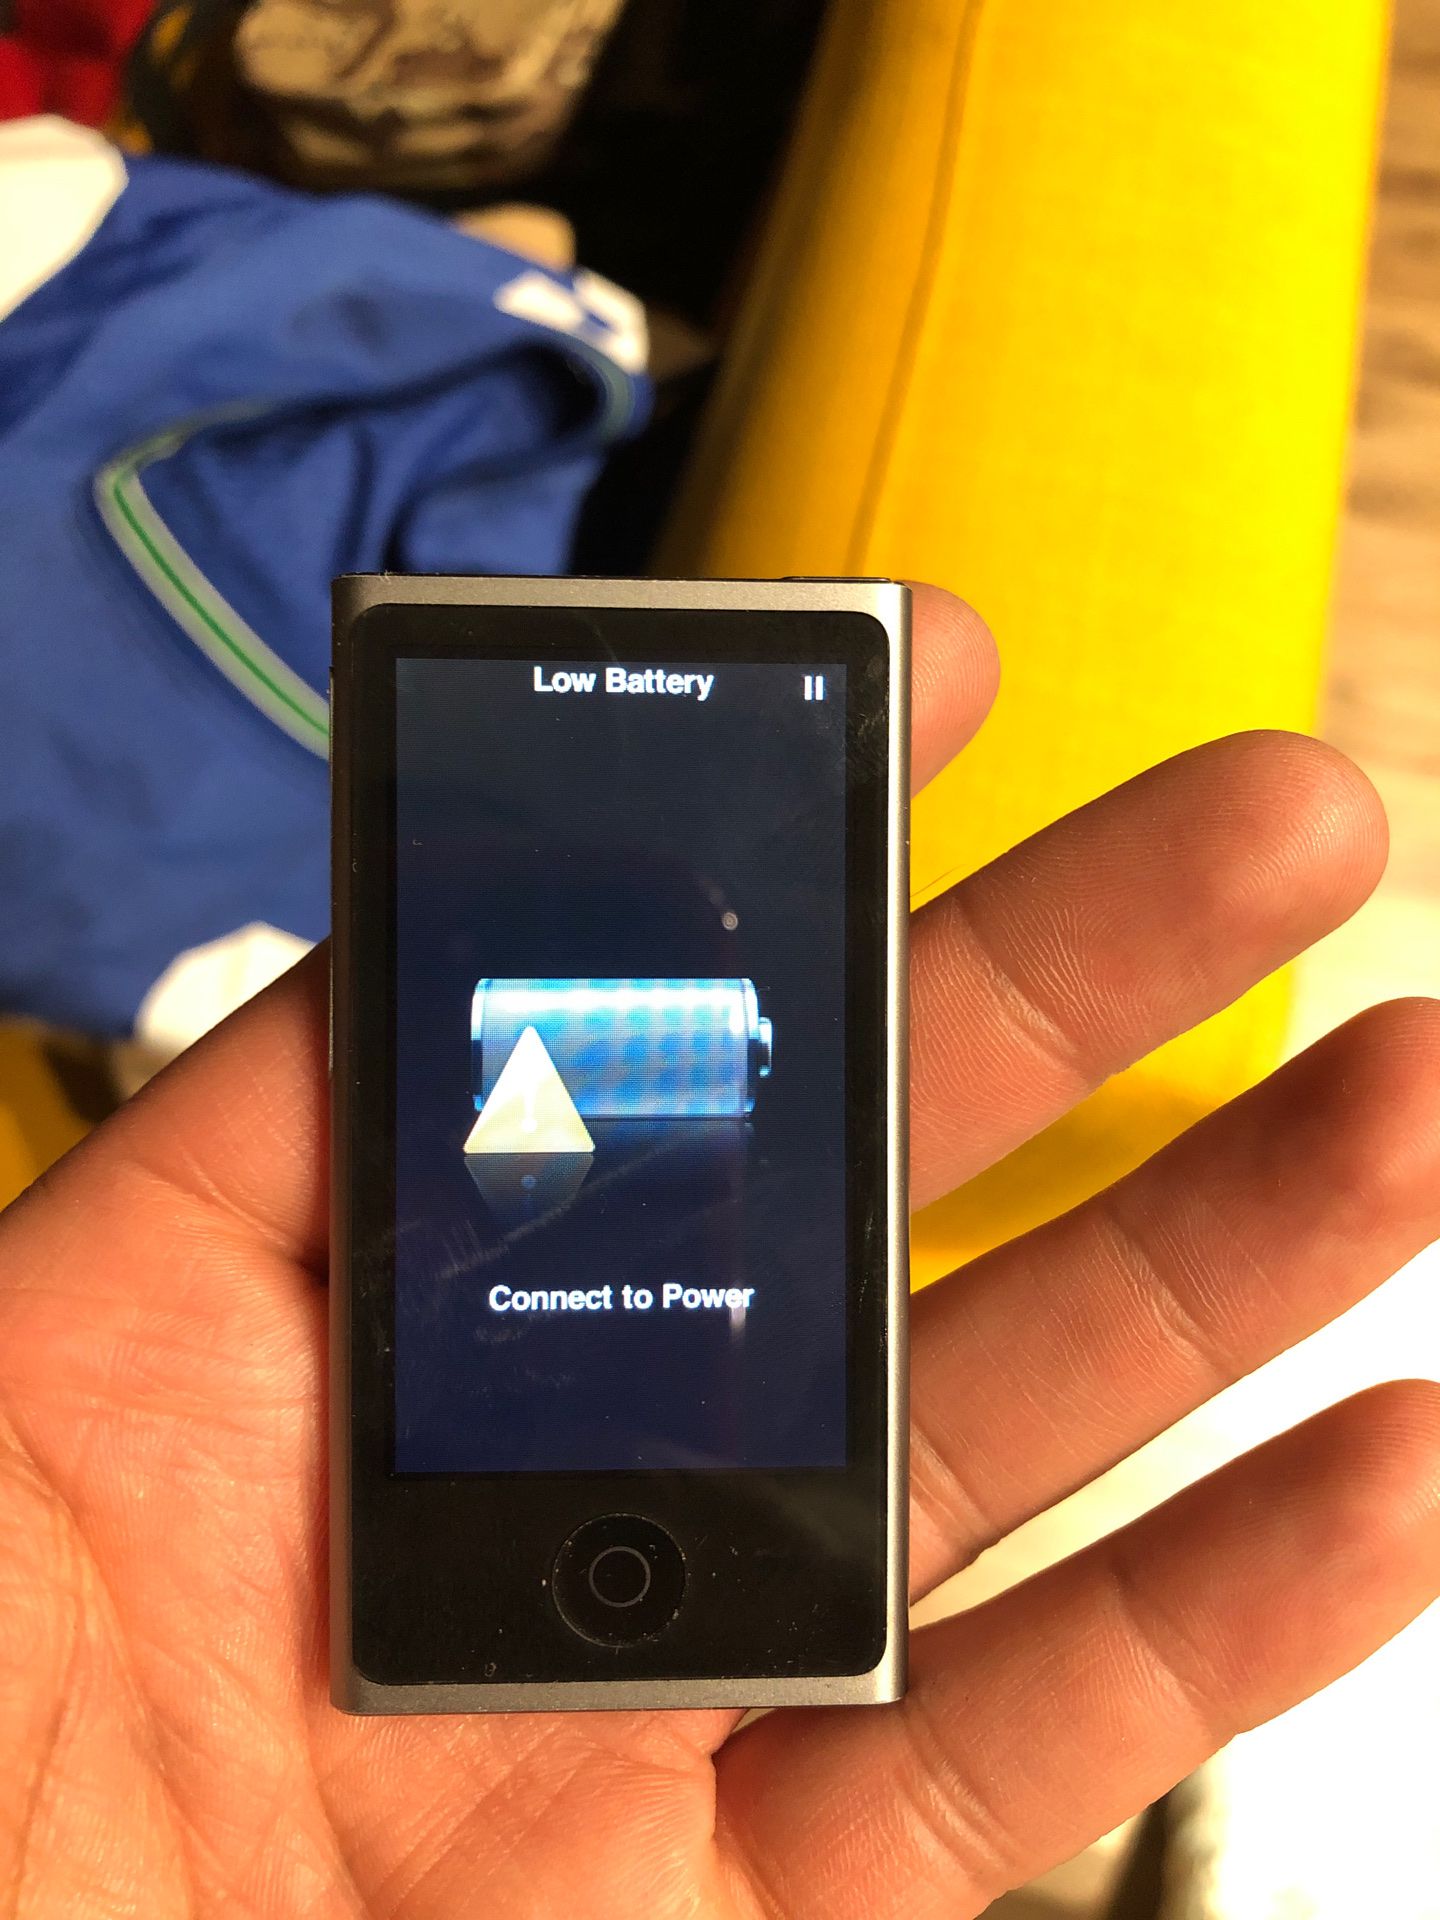 Apple iPod nano (7th Generation) - 16 GB - Space Gray